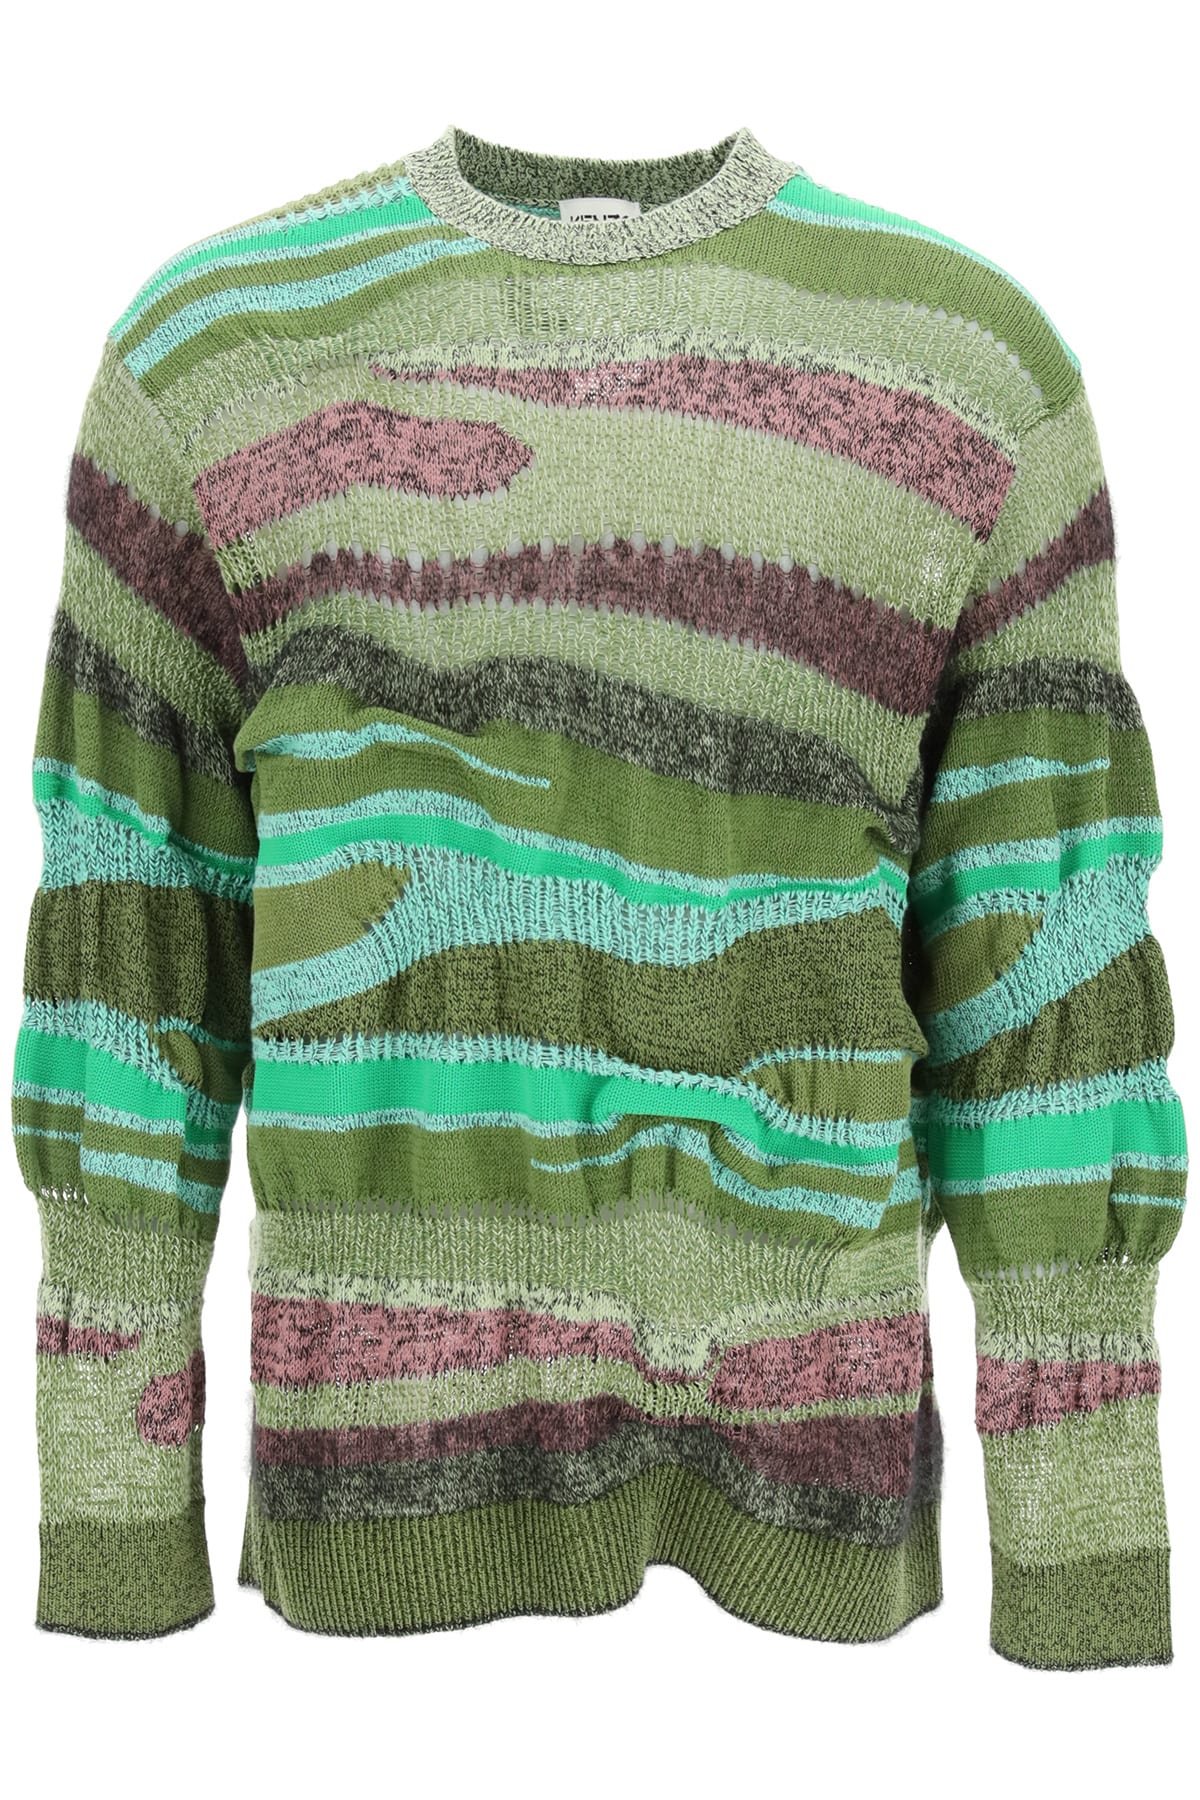 Kenzo Multi-stripe Sweater